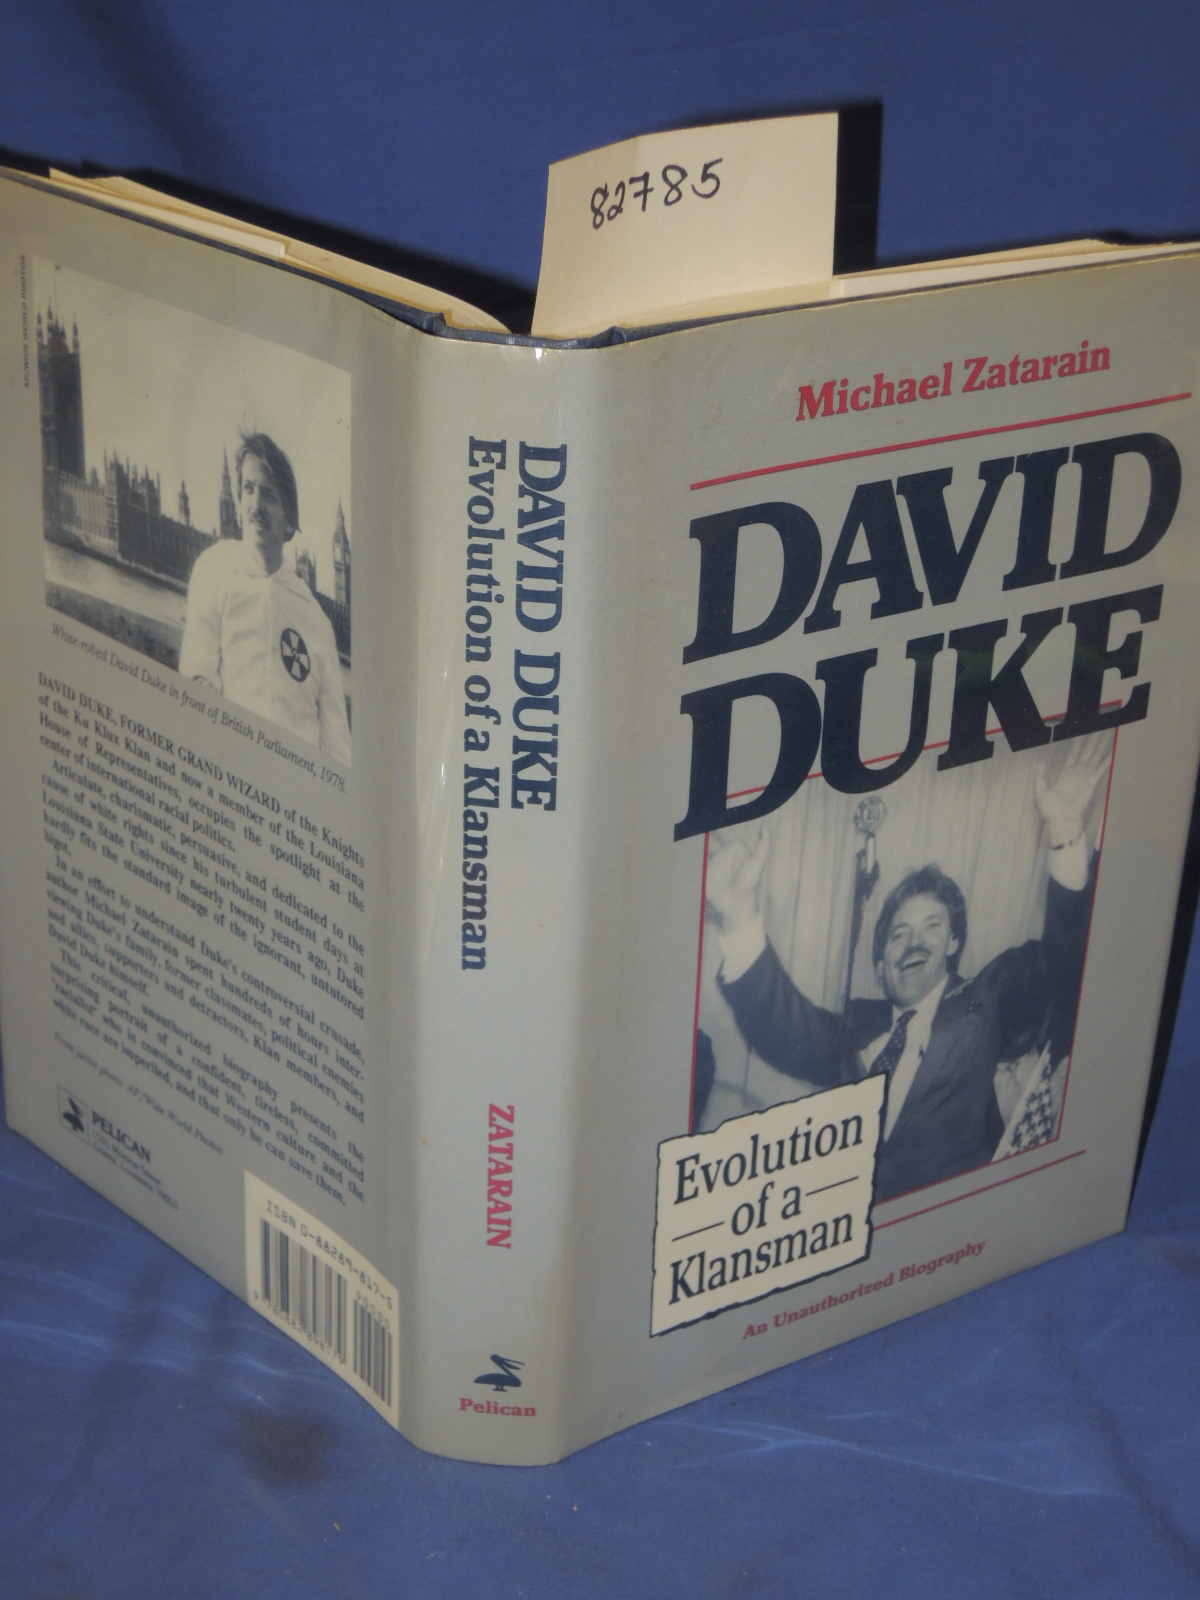 Zatarain, Michael  Signed by the author: David Duke - Evolution of a Klansman